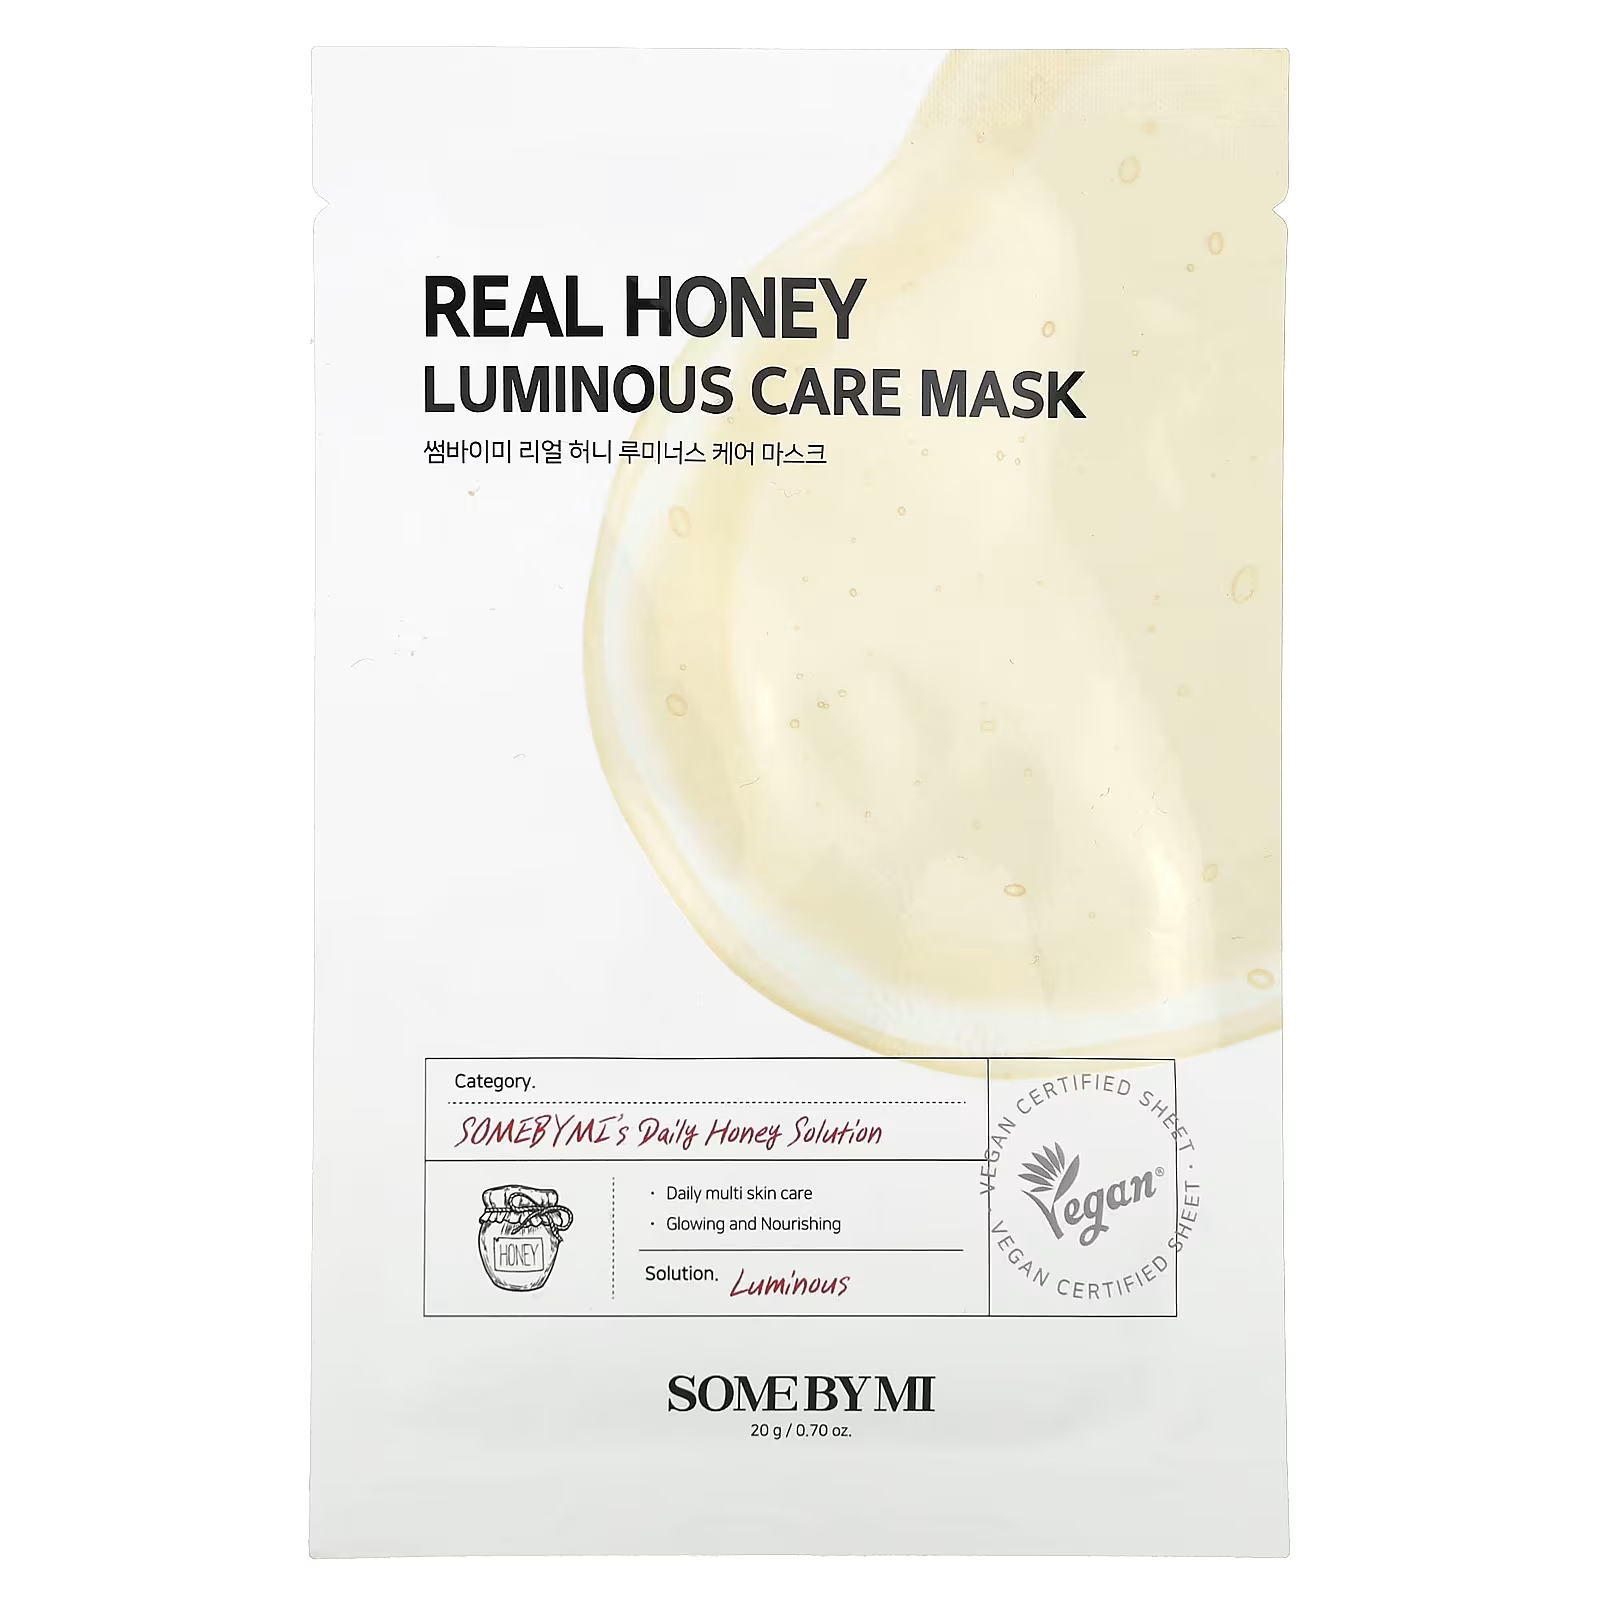 Косметическая маска SOME BY MI Real Honey Luminous Care, 1 лист, 0,70 унции (20 г) косметическая маска some by mi real honey luminous care 1 лист 0 70 унции 20 г